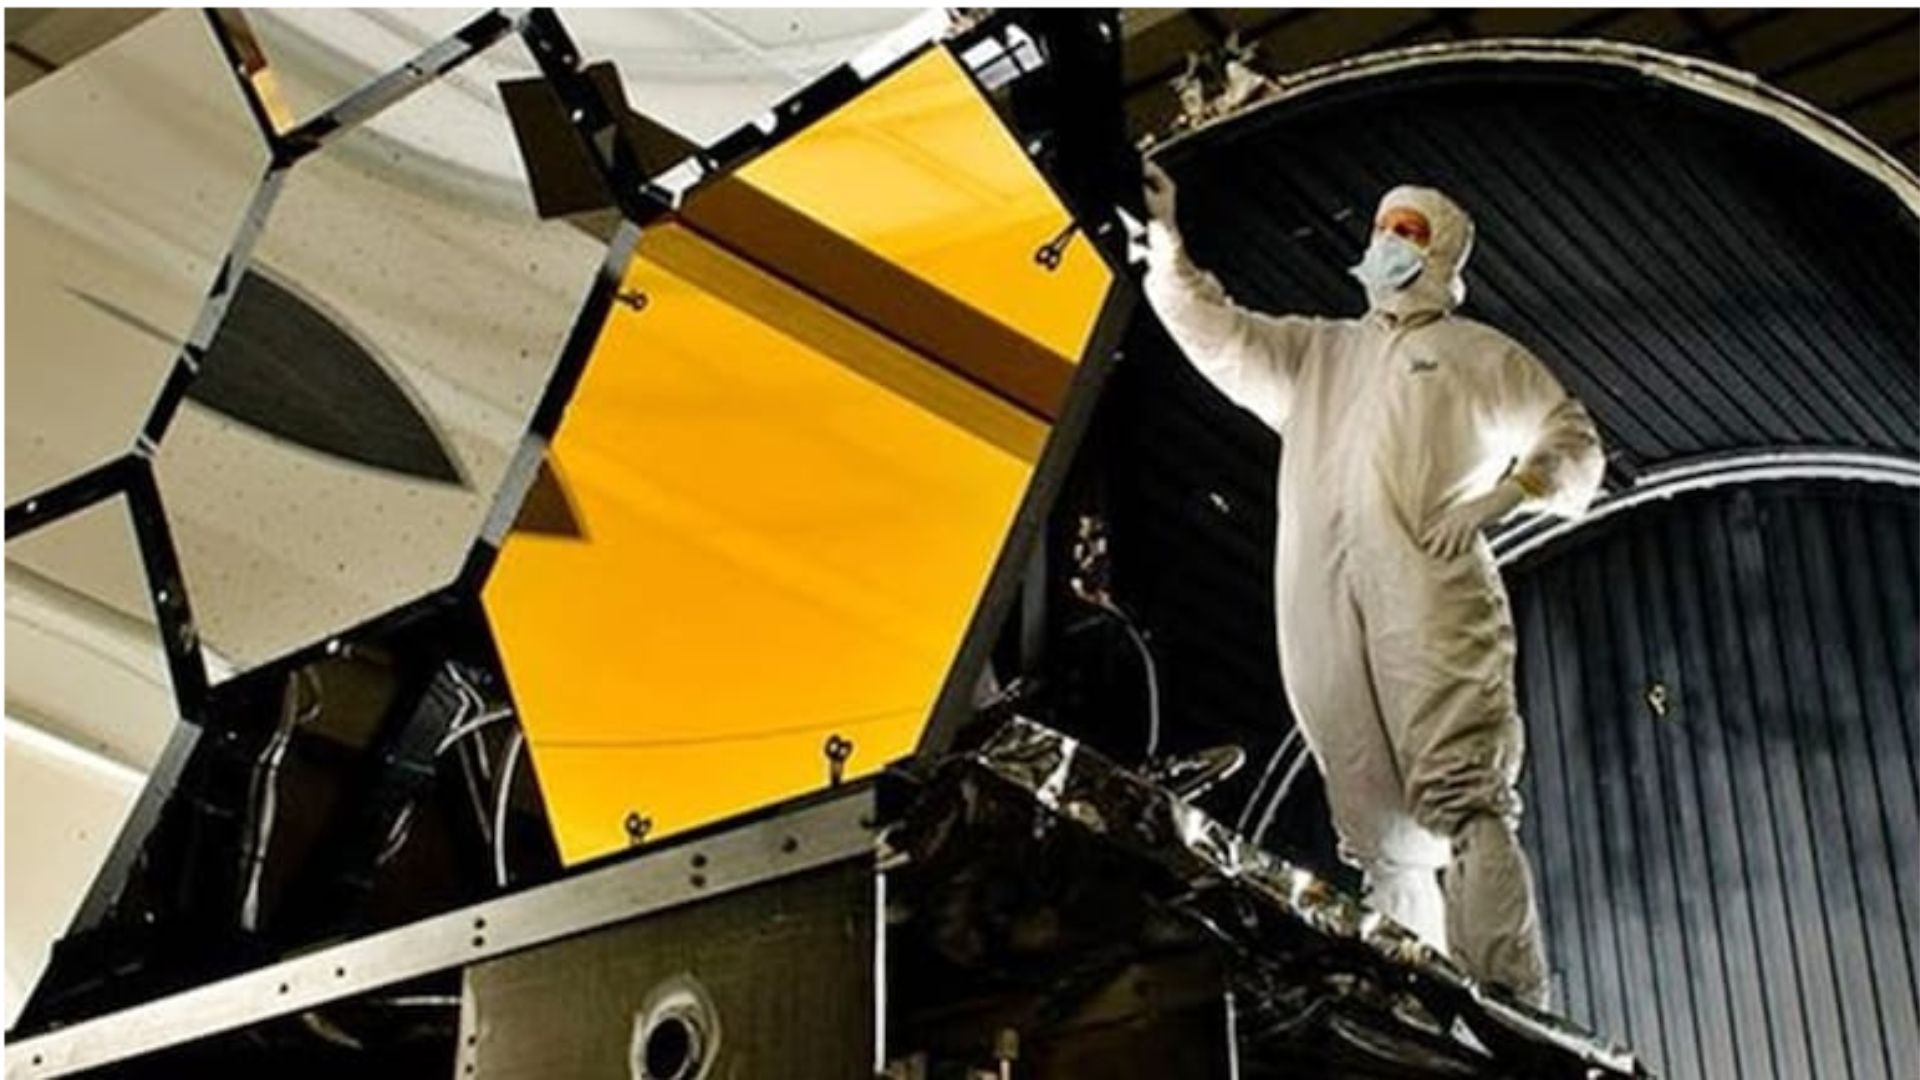 James Webb Telescope struck by micrometeoroid in space